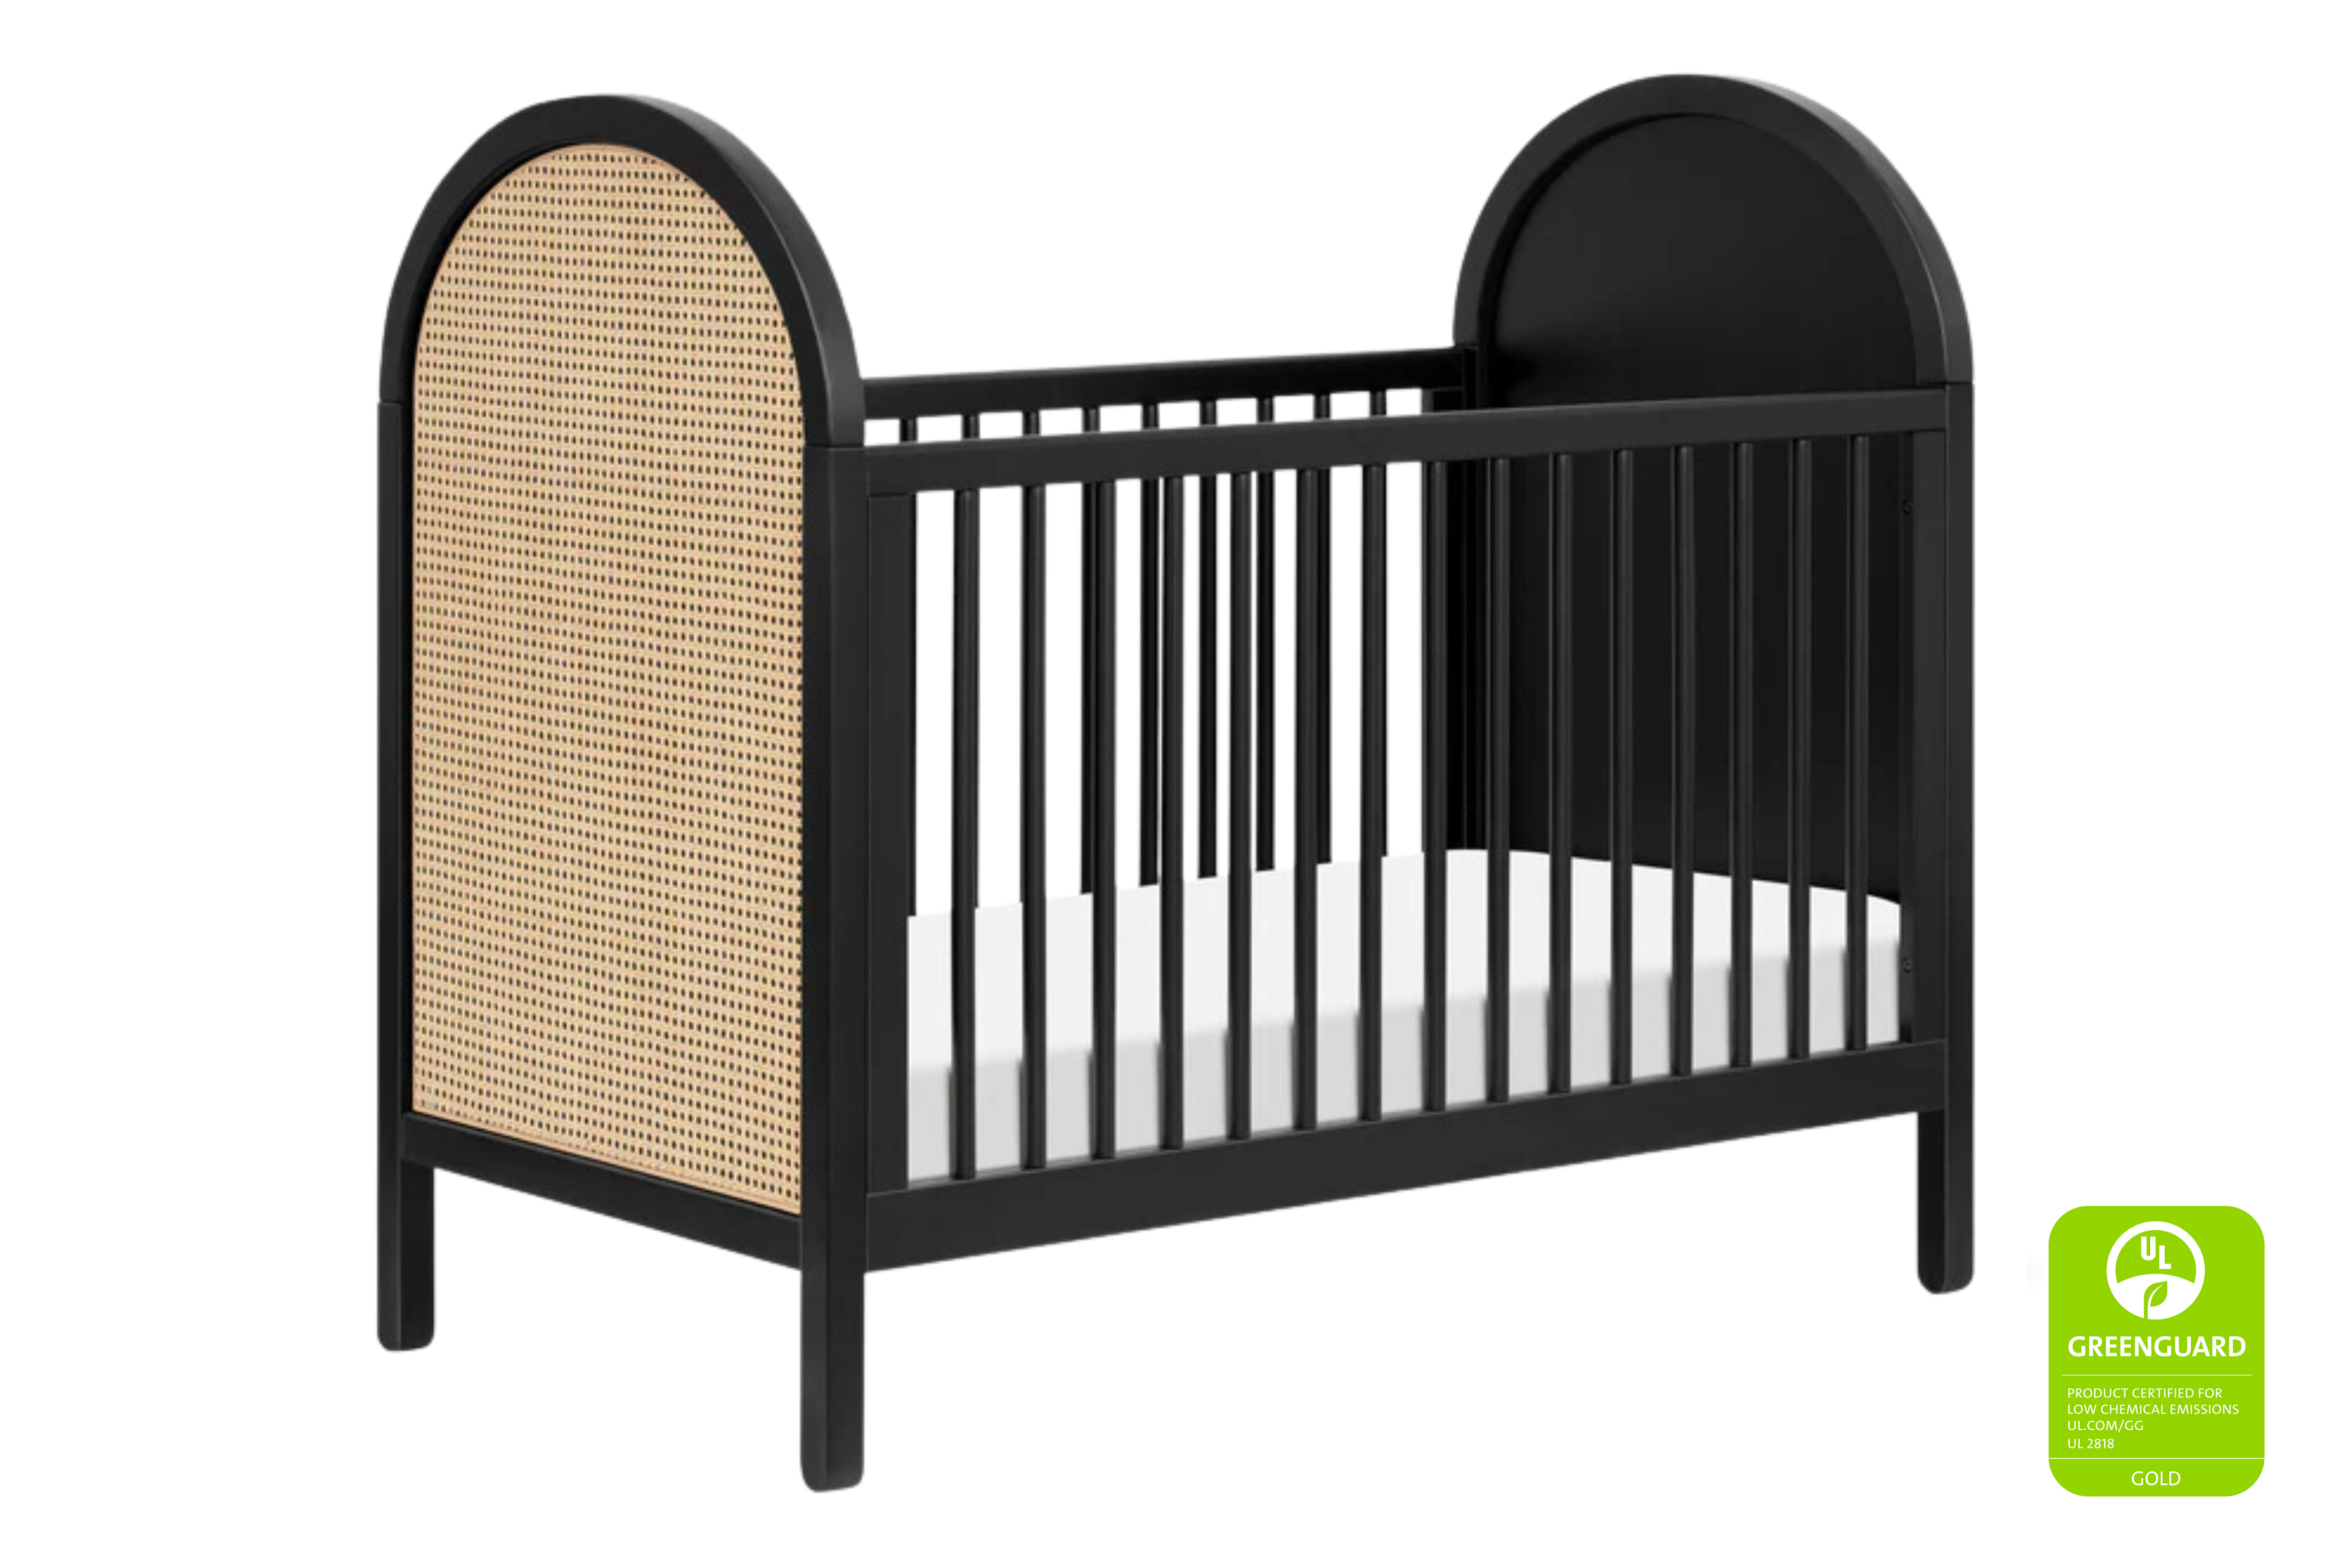  Babyletto Bondi Convertible Crib In Black with natural cane#color_black-with-natural-cane